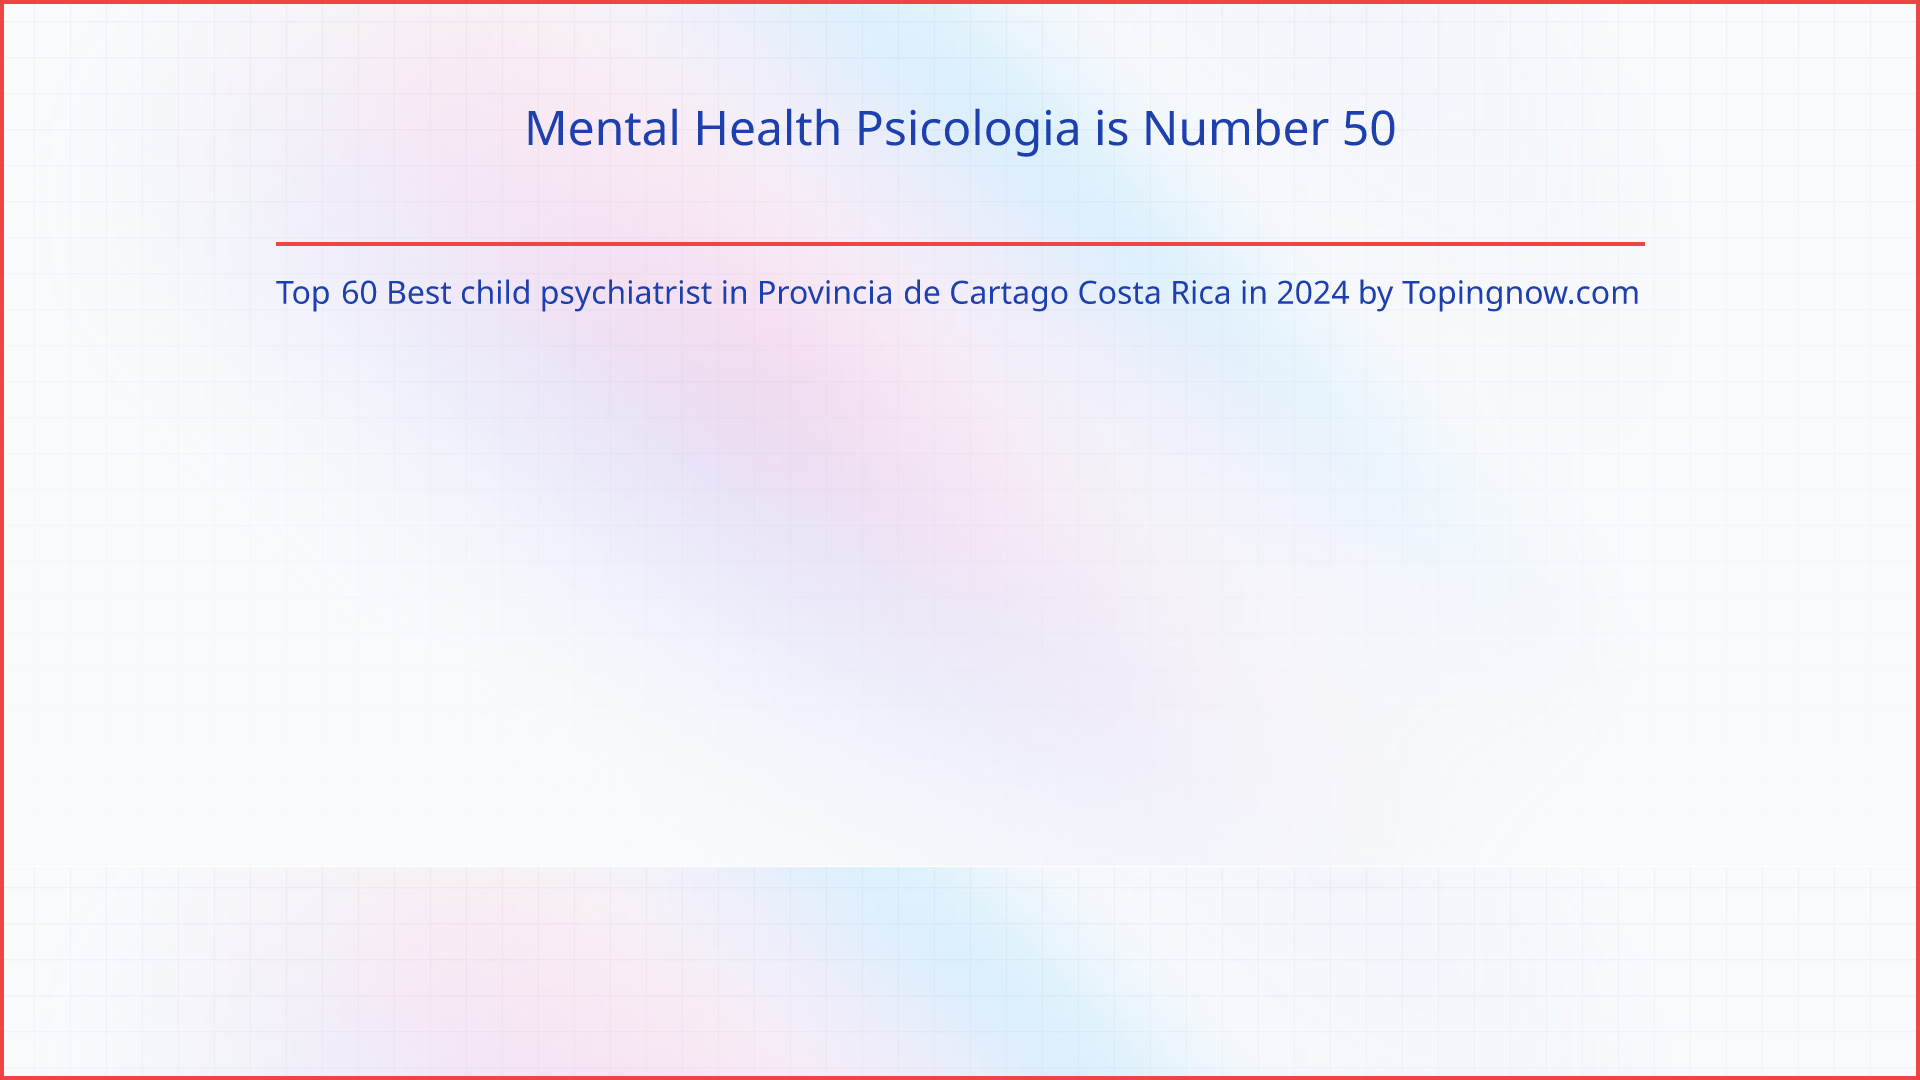 Mental Health Psicologia: Top 60 Best child psychiatrist in Provincia de Cartago Costa Rica in 2024